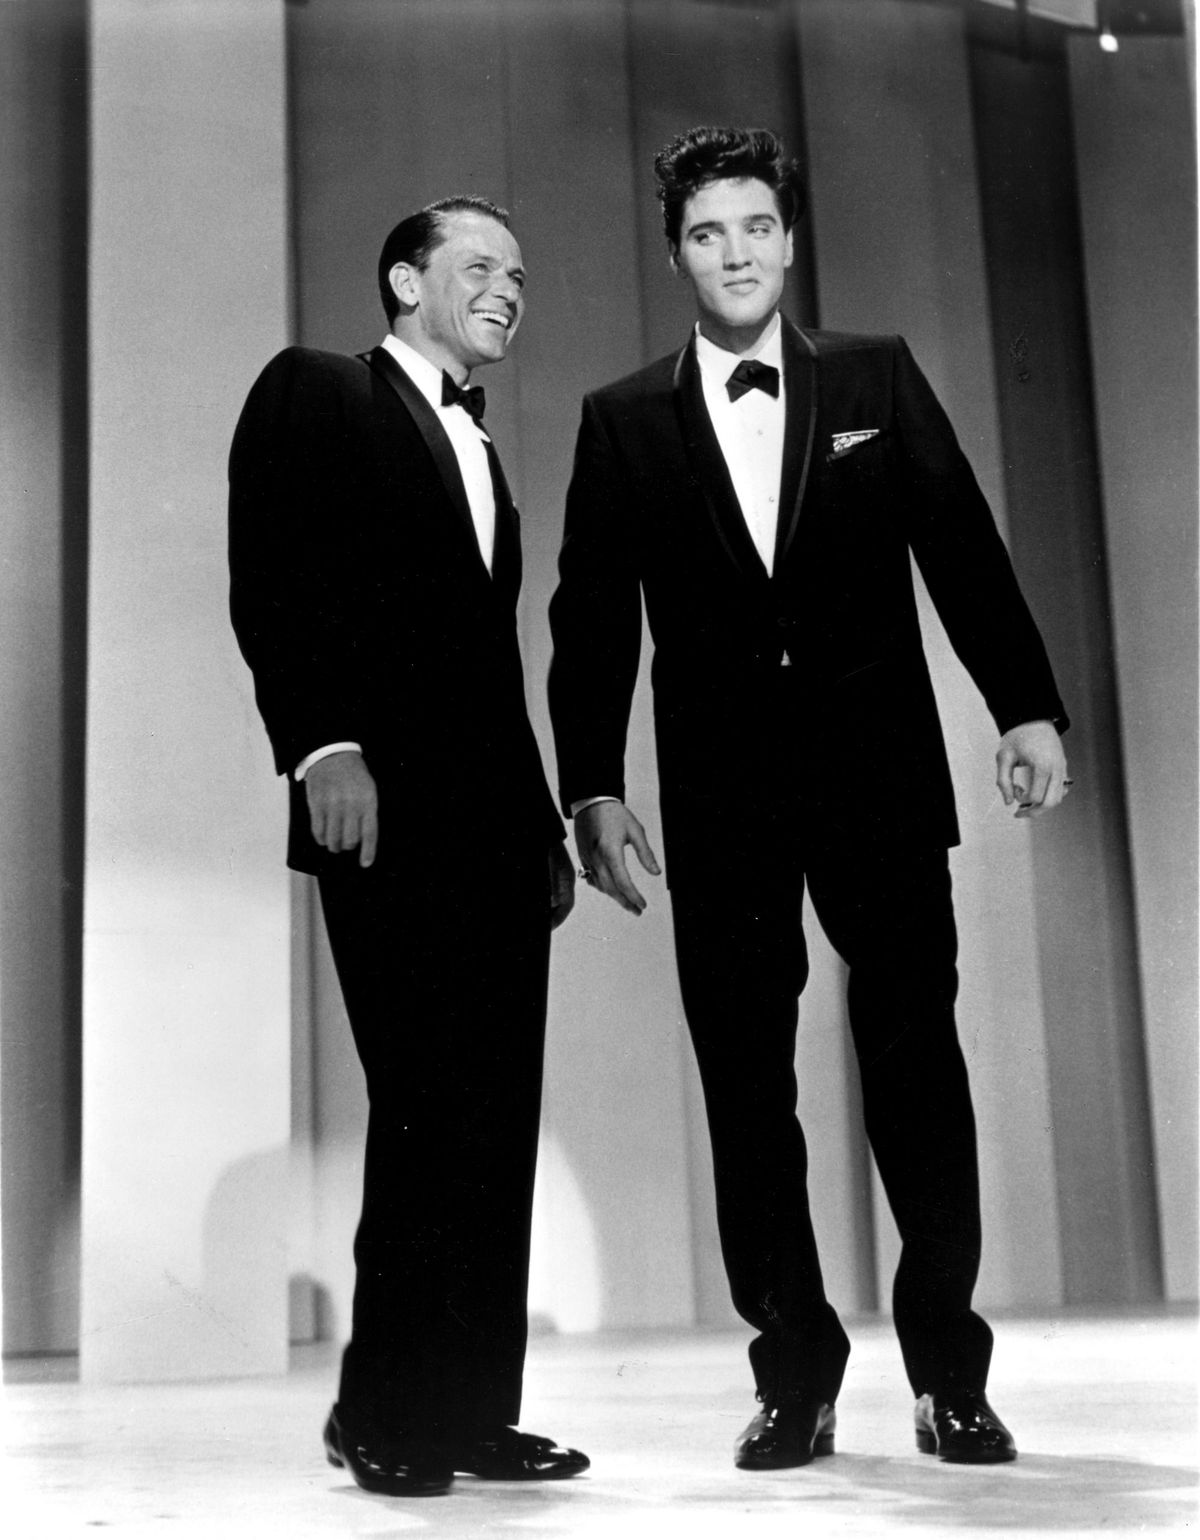 Nach heftiger Kritik kümmerte sich Frank Sinatra intensiv um Elvis Presley